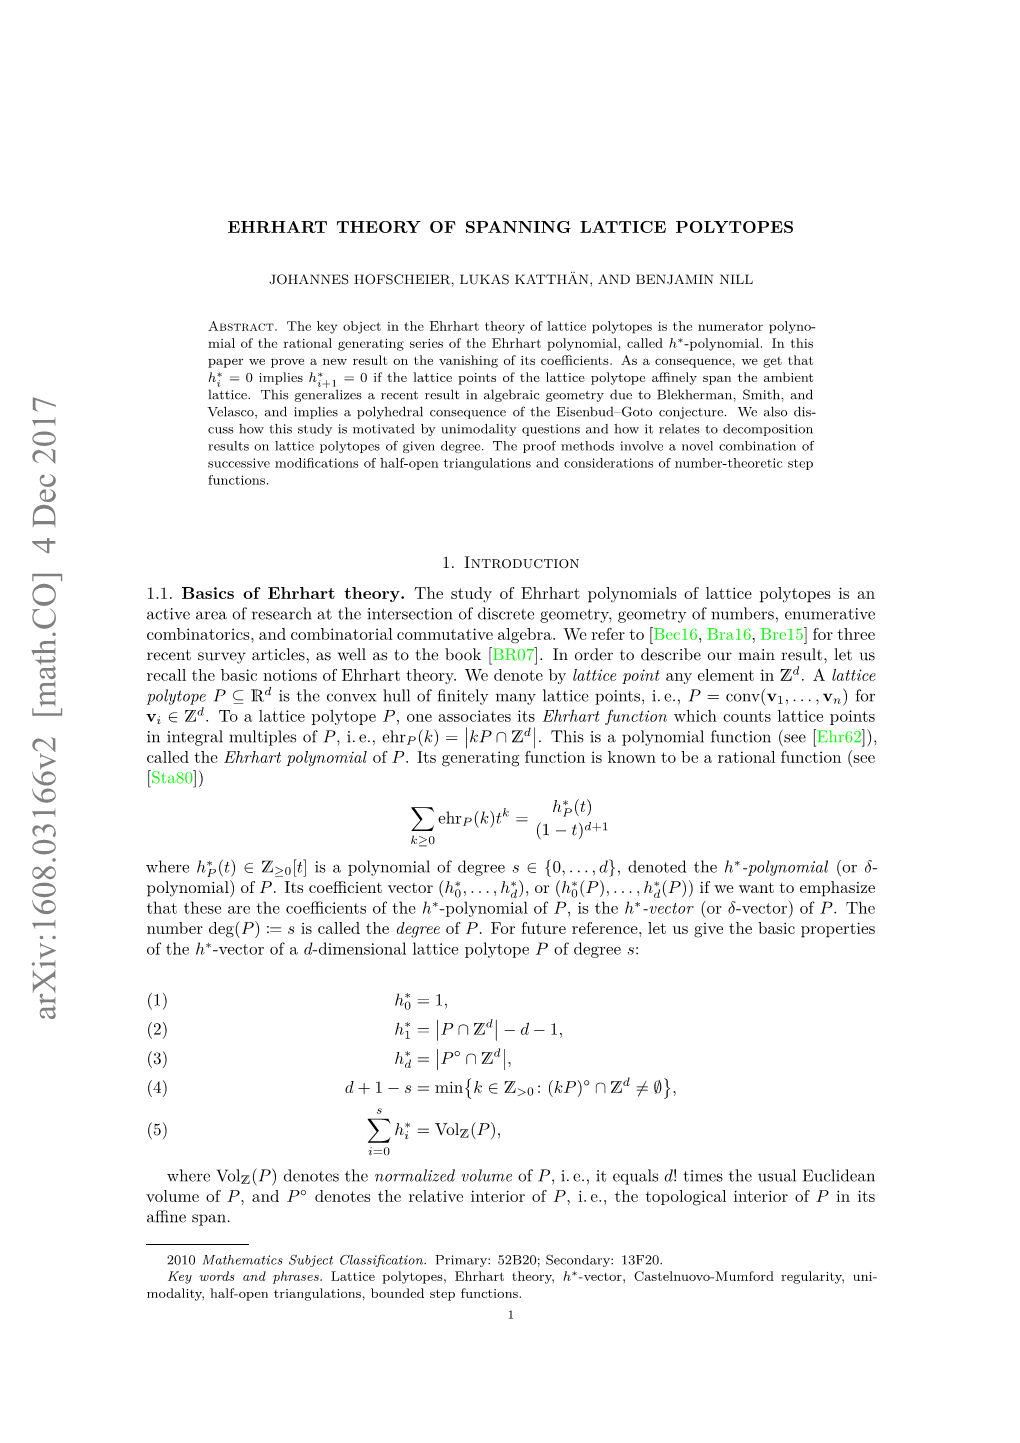 Ehrhart Theory of Spanning Lattice Polytopes 3